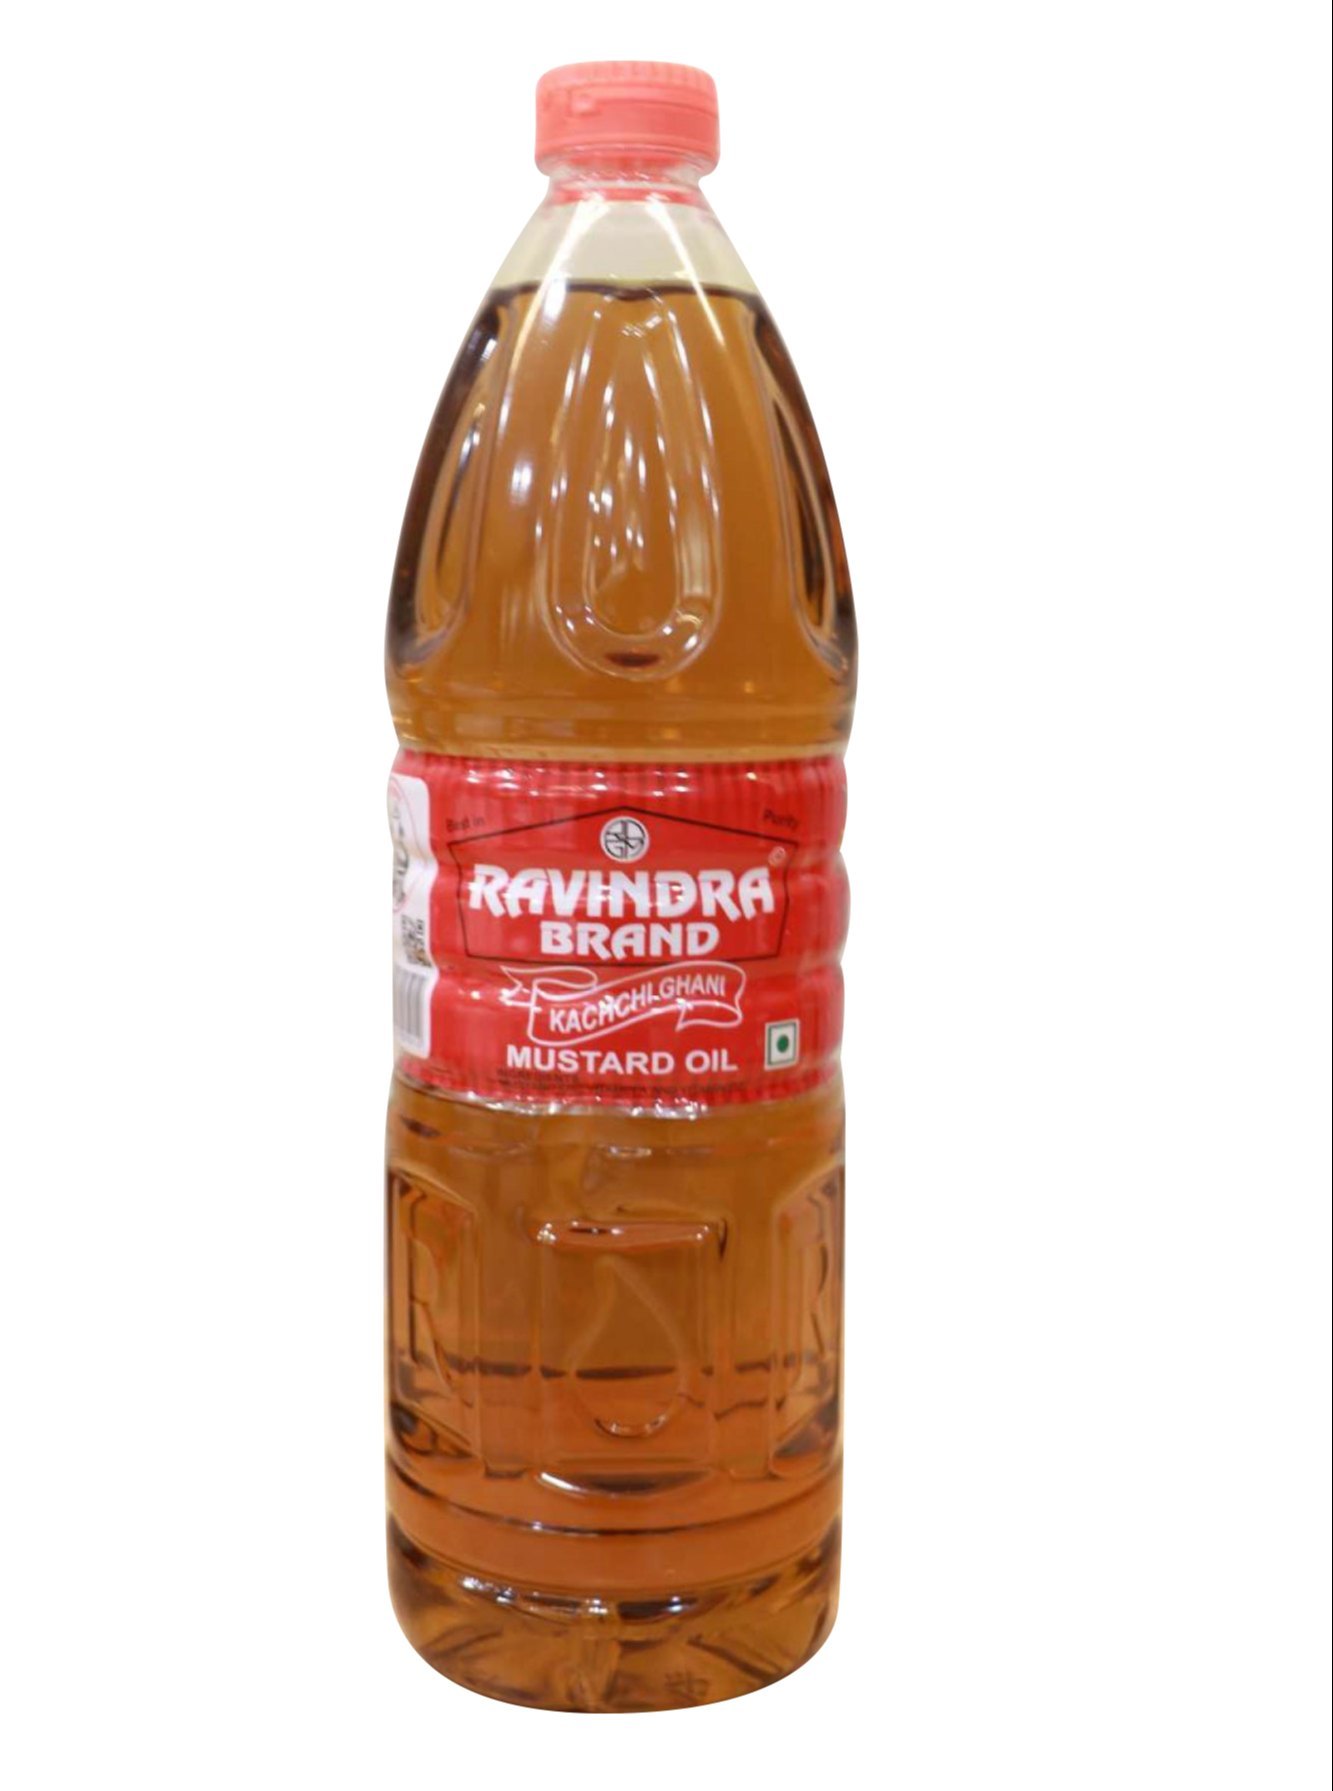 Ravindra Brand Mustard Oil